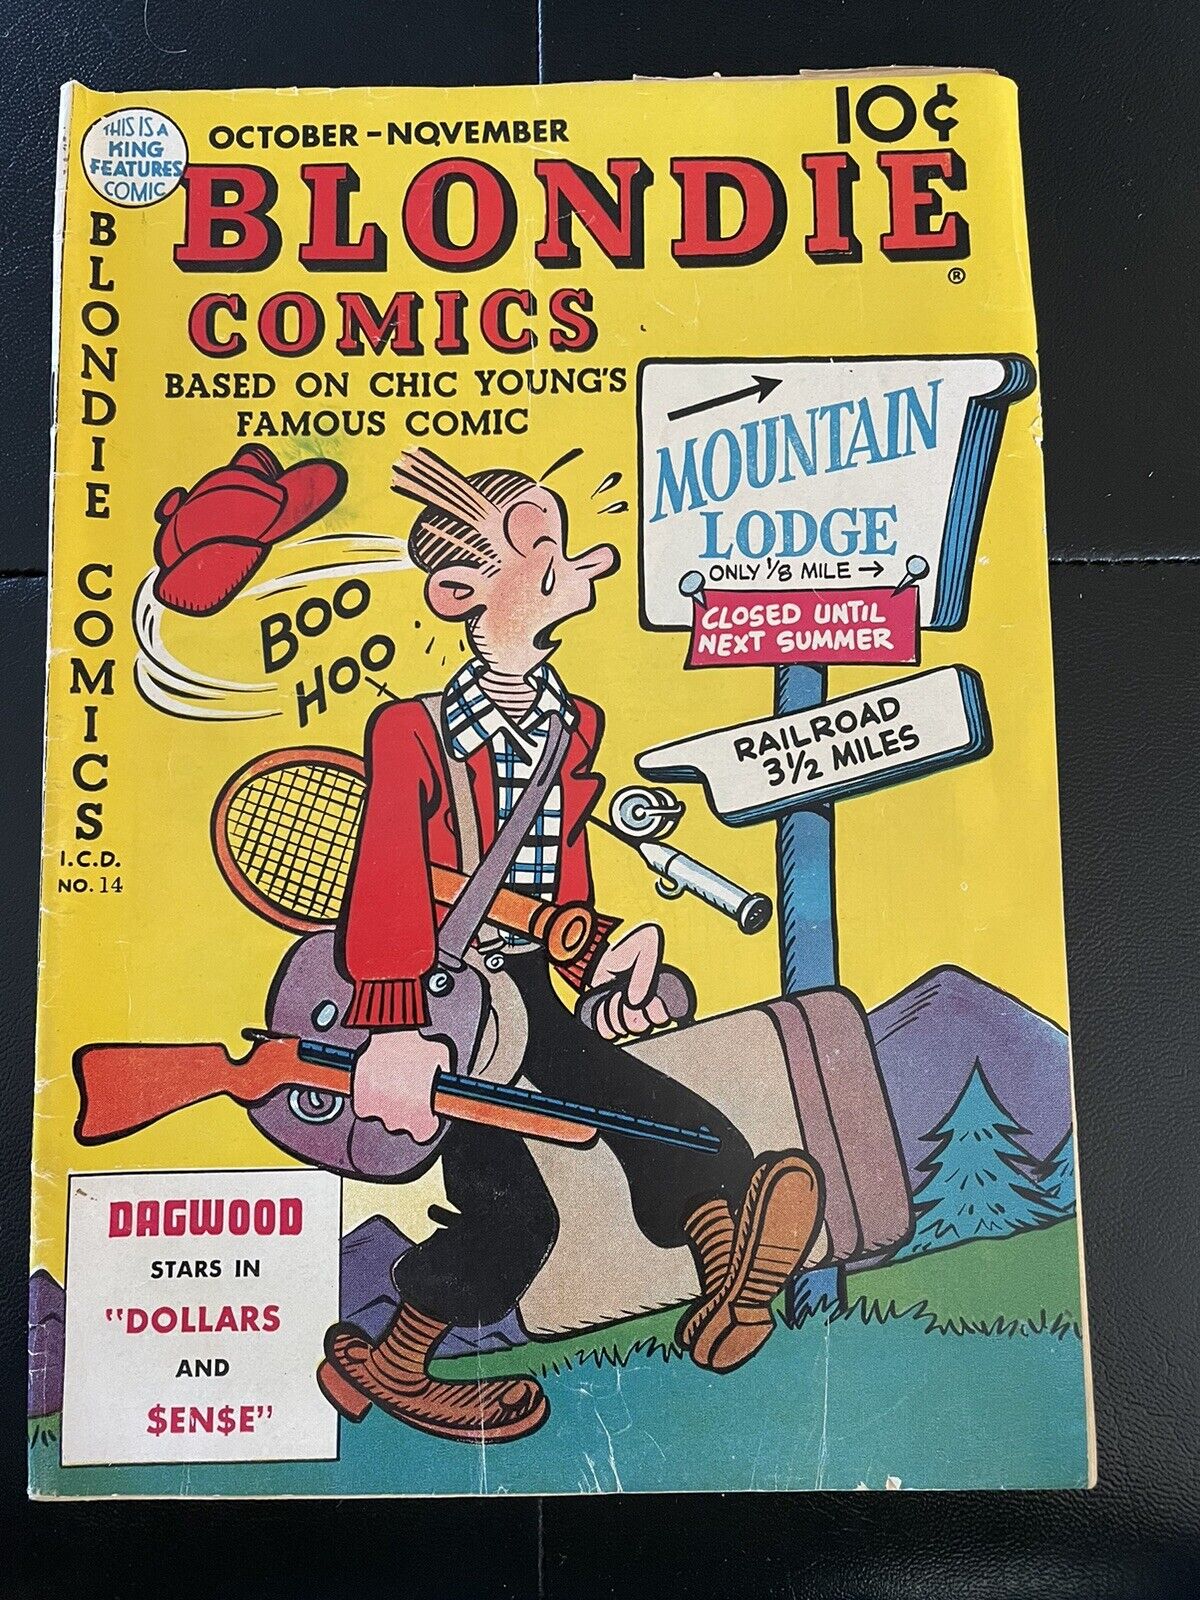 KING Comics BLONDIE COMICS #14 Scarce Golden Age 1949